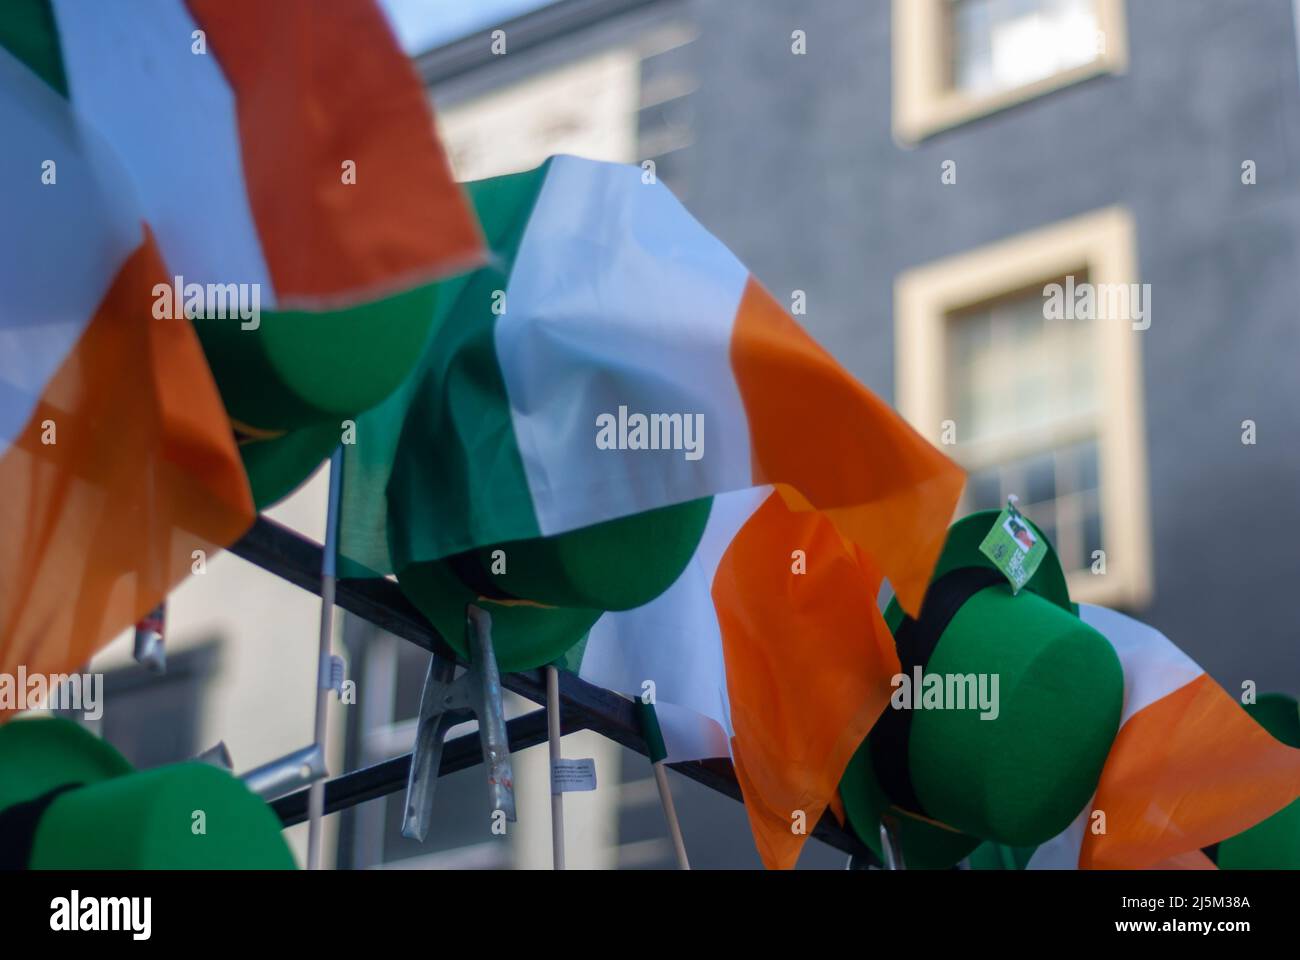 Dublin Ireland st Patrics day celebration parade with crowd and demostration Stock Photo